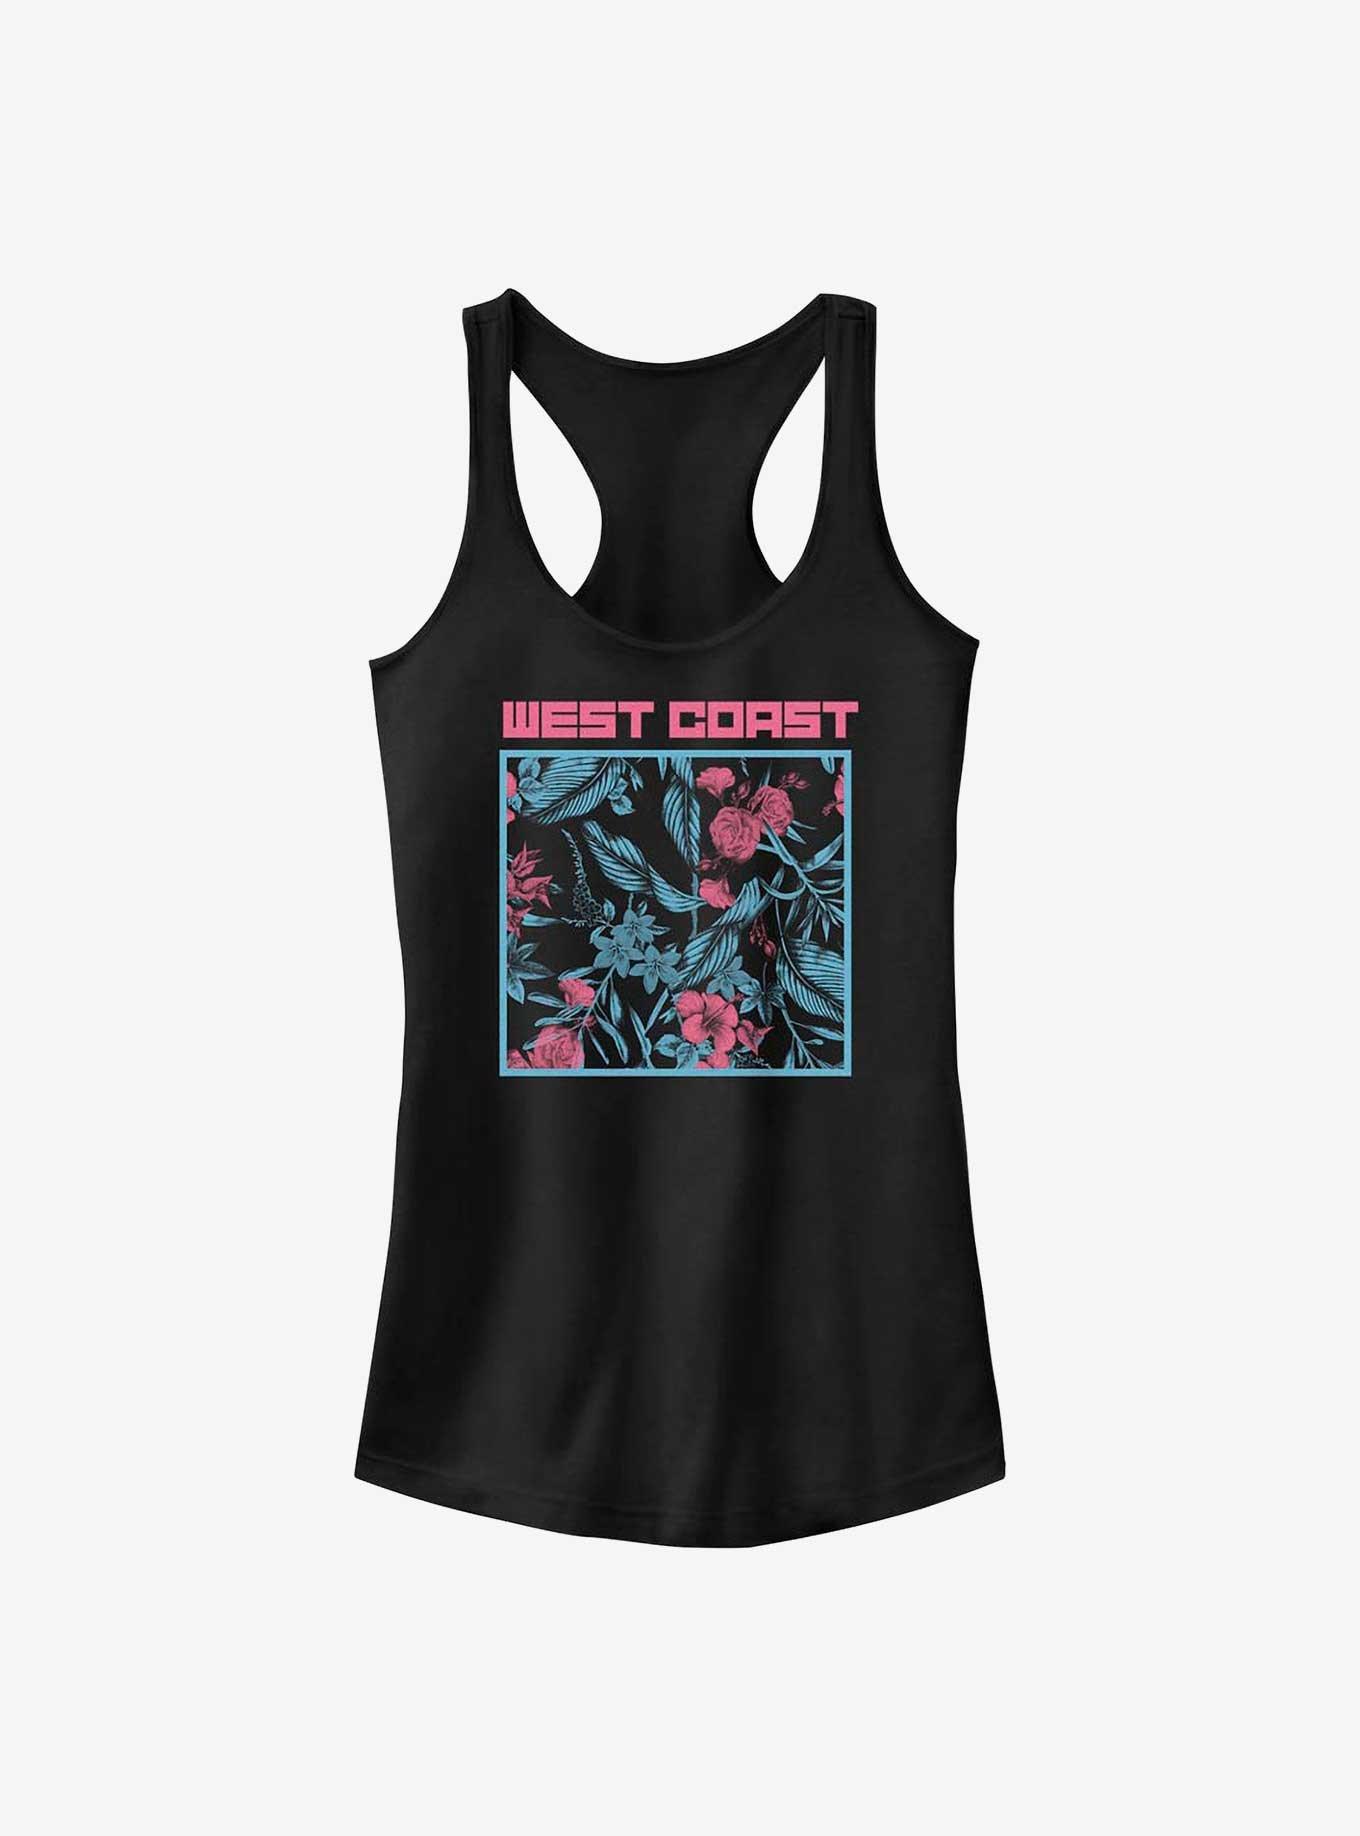 West Coast Girls Tank